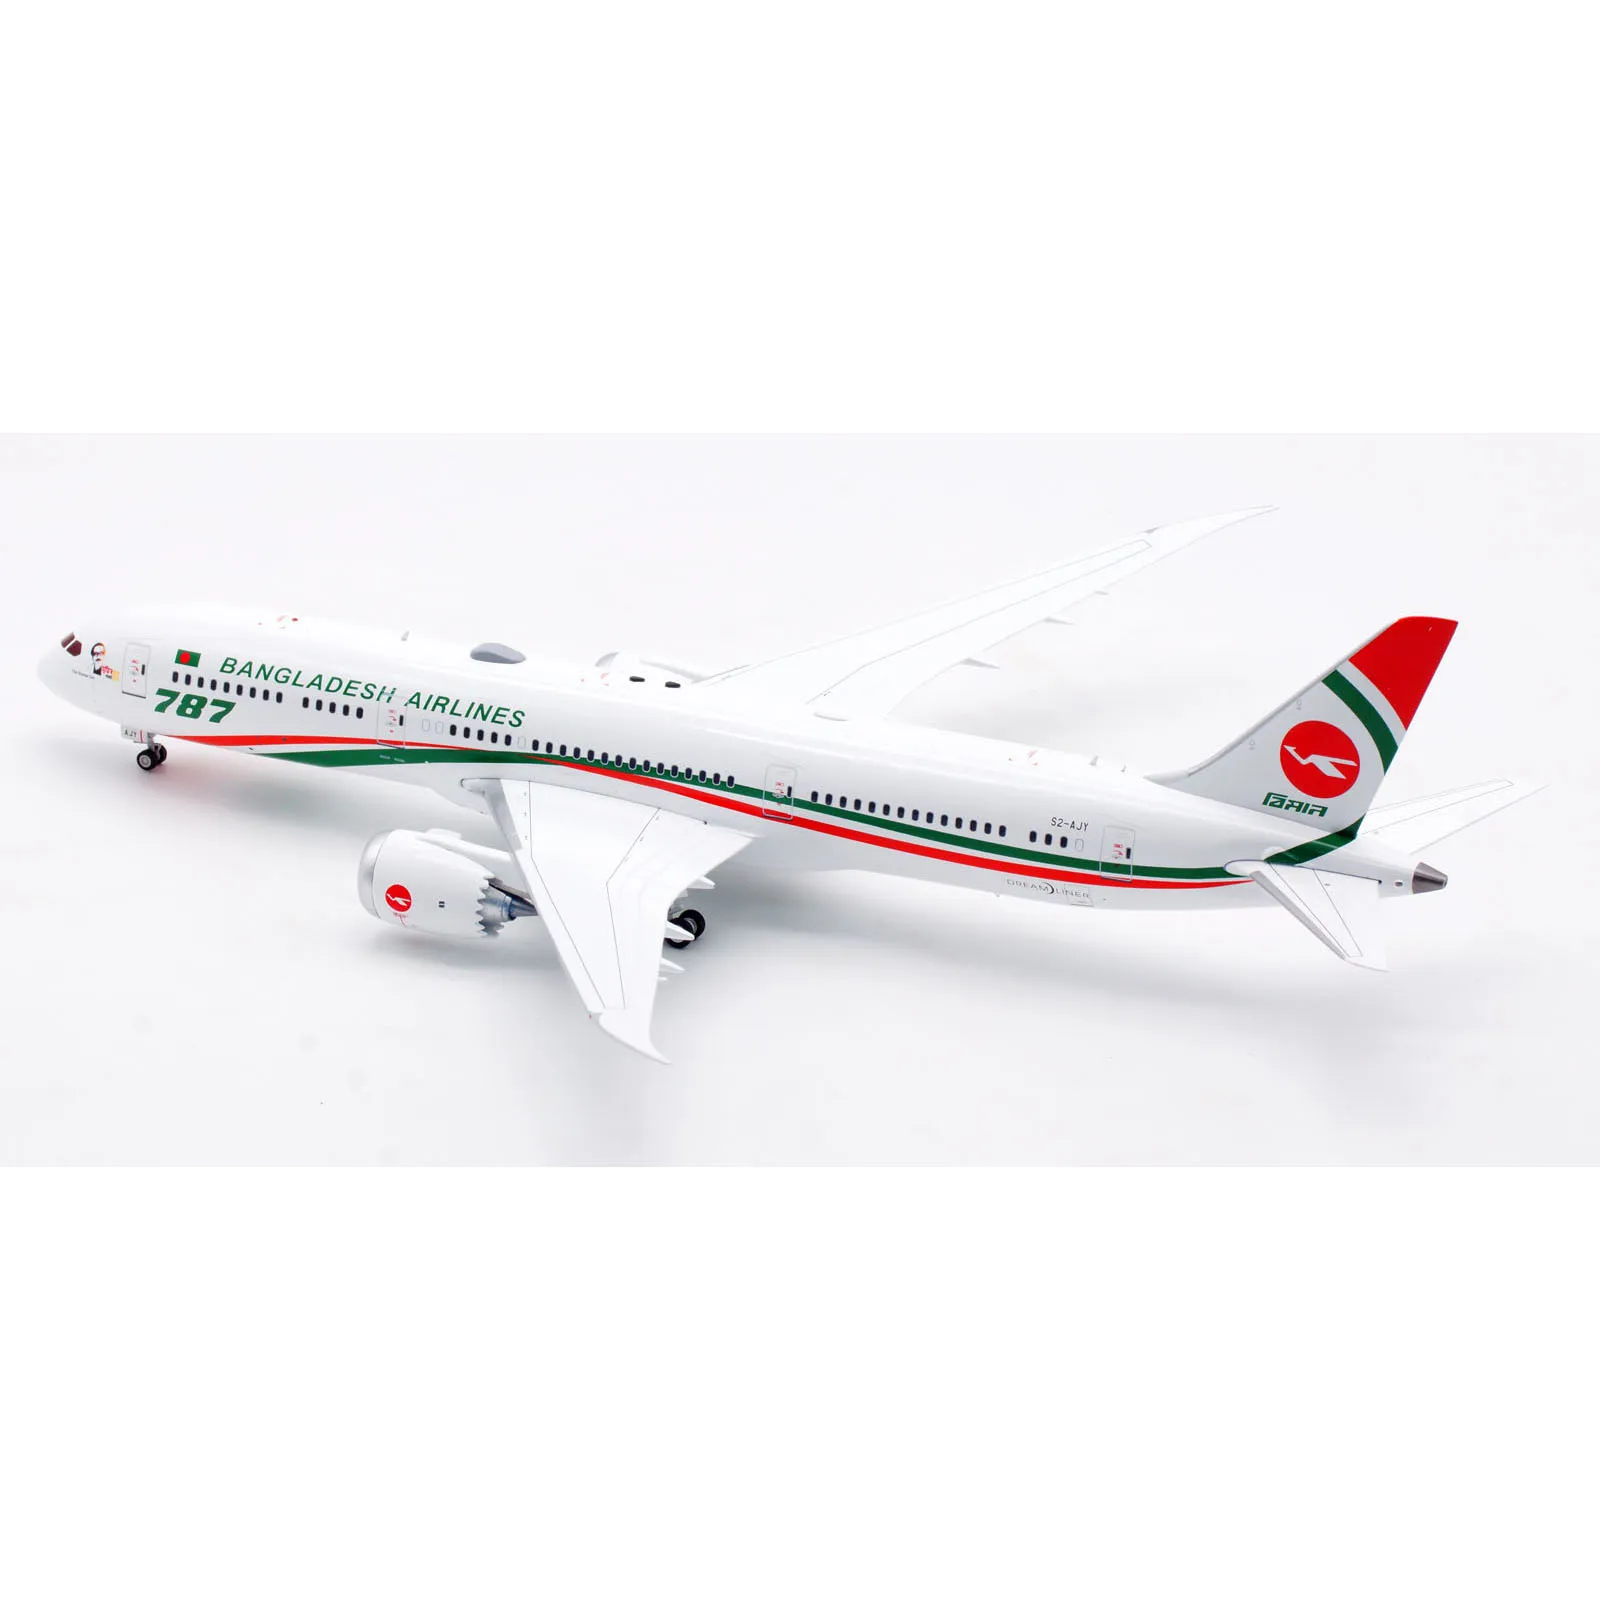 Avión coleccionable de aleación IF789EY1123, regalo INFLIGHT 1:200 Biman Bangladesh Airlines Boeing B787-9, modelo de avión fundido a presión, S2-AJY